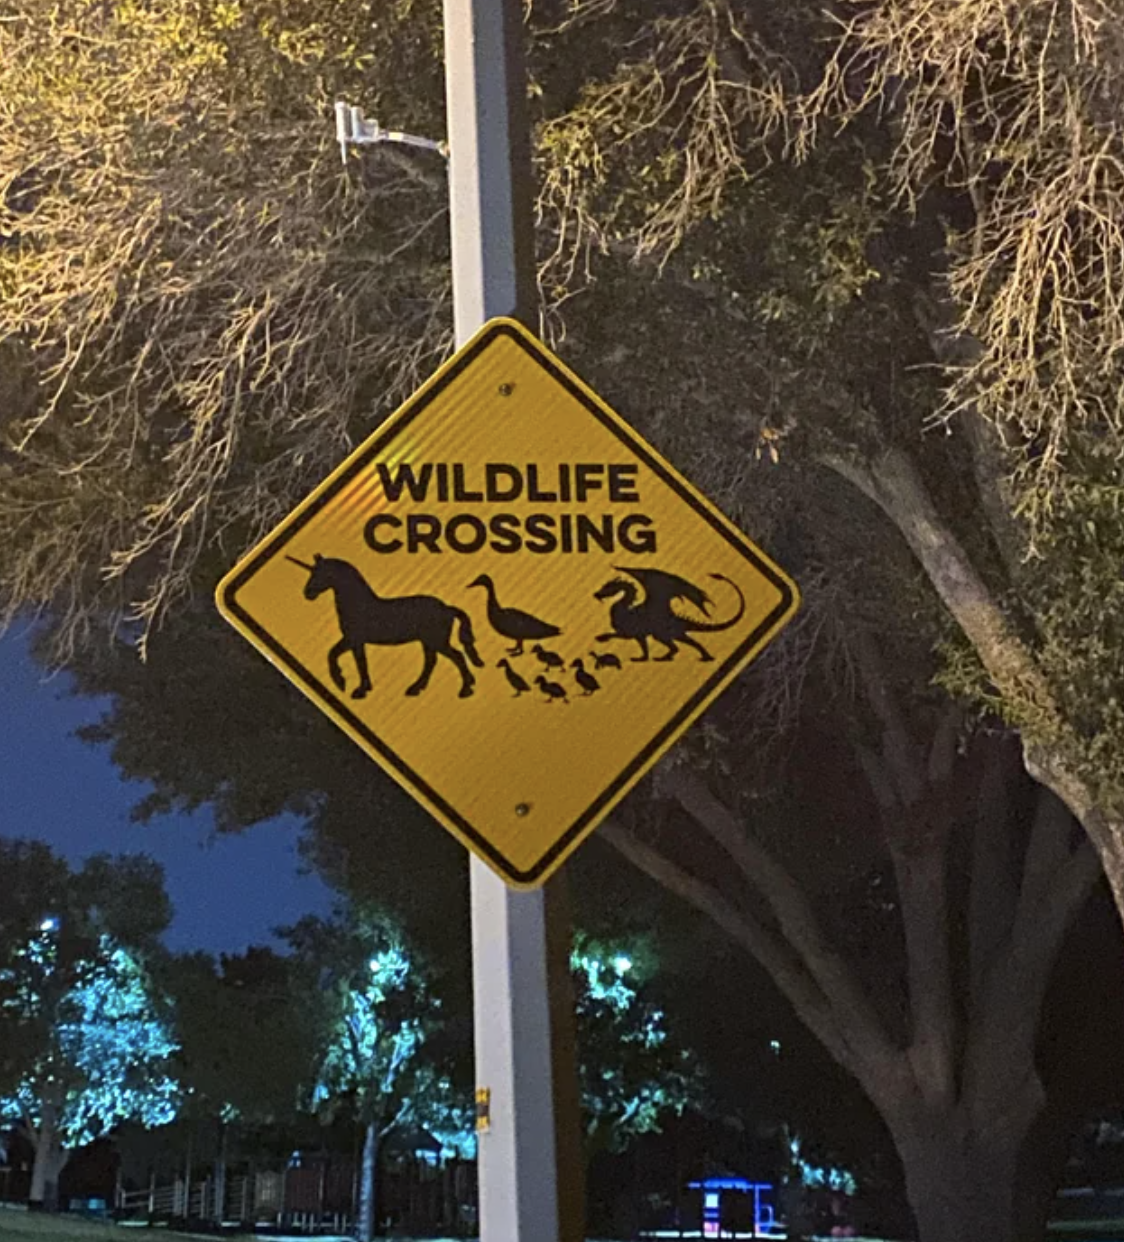 Street warning sign: &quot;Wildlife crossing&quot;